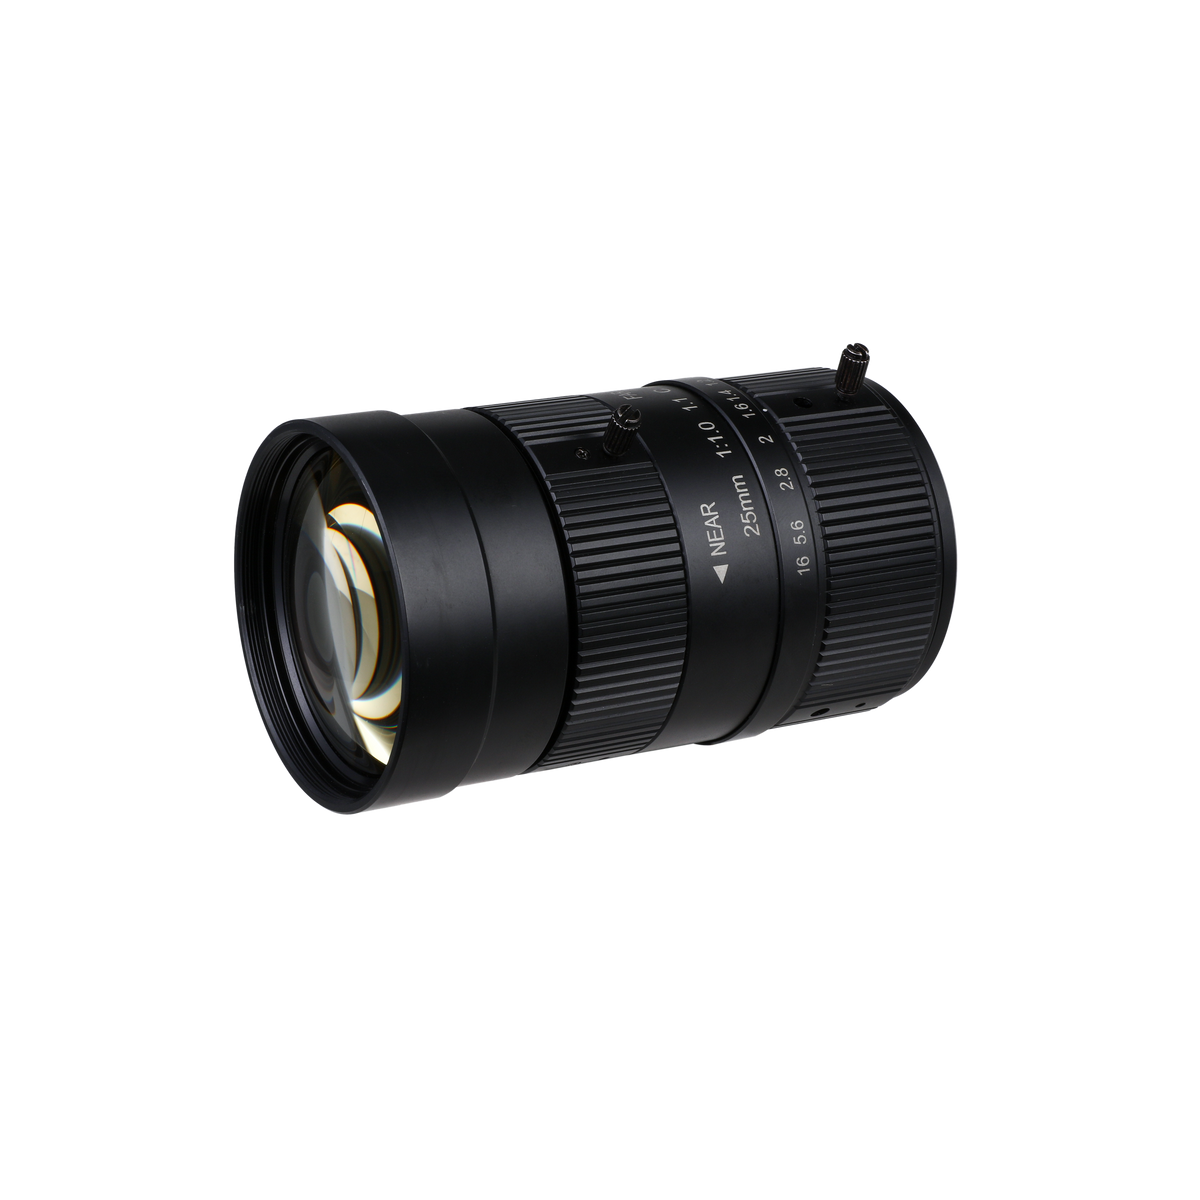 DAHUA PFL25-L12M 12MP 1.1" 25 mm Fixed-focal Lens